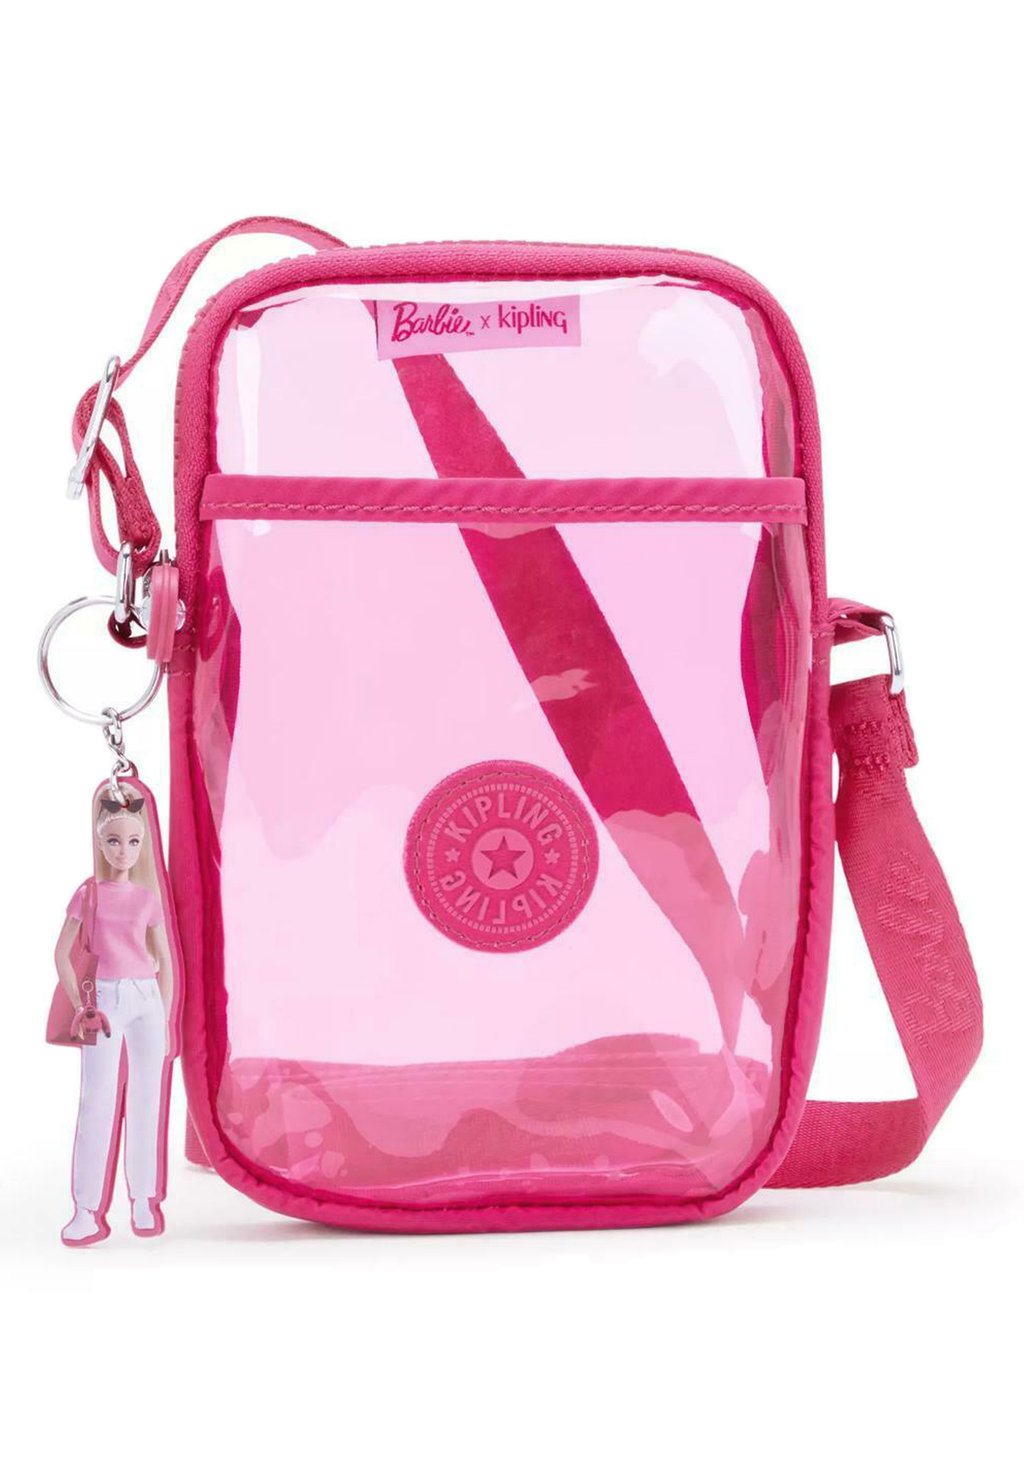 Сумка через плечо TALLY X BARBIE, Kipling, цвет power pink transpant сумка через плечо afia x barbie kipling неон фуксия